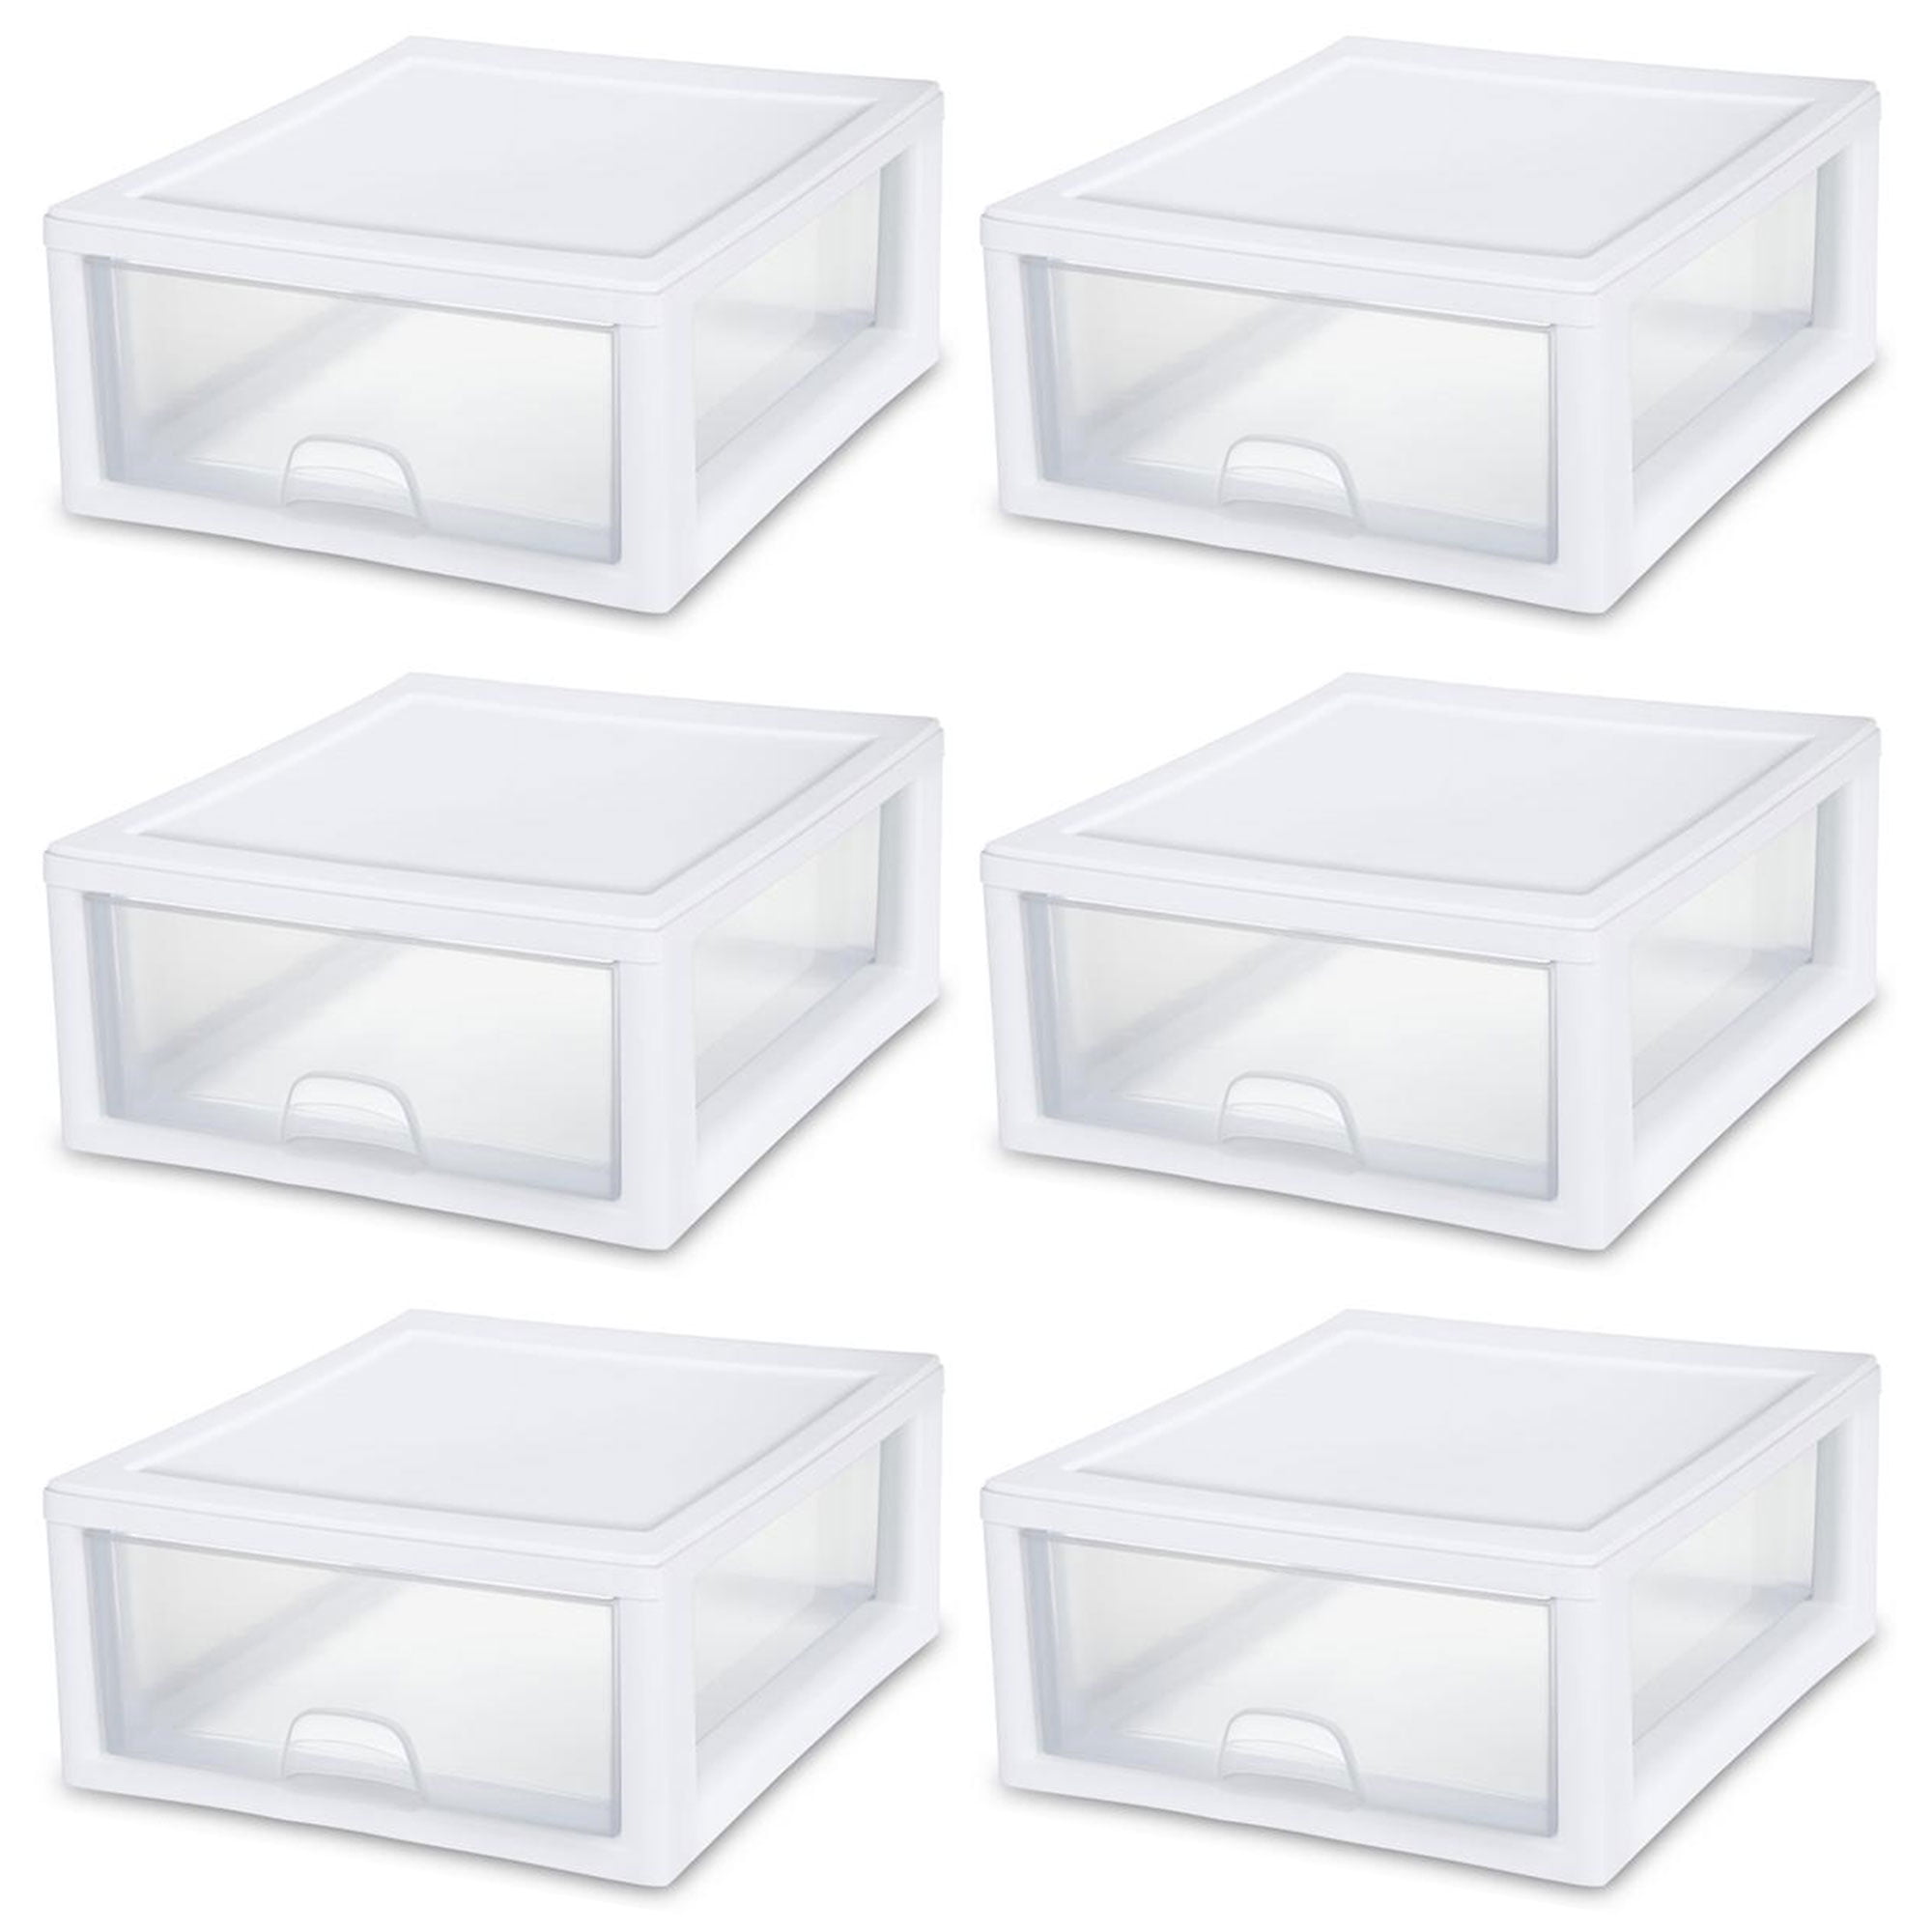 Sterilite 16 qt. Plastic Stacking Storage Container Box w/ Lid in